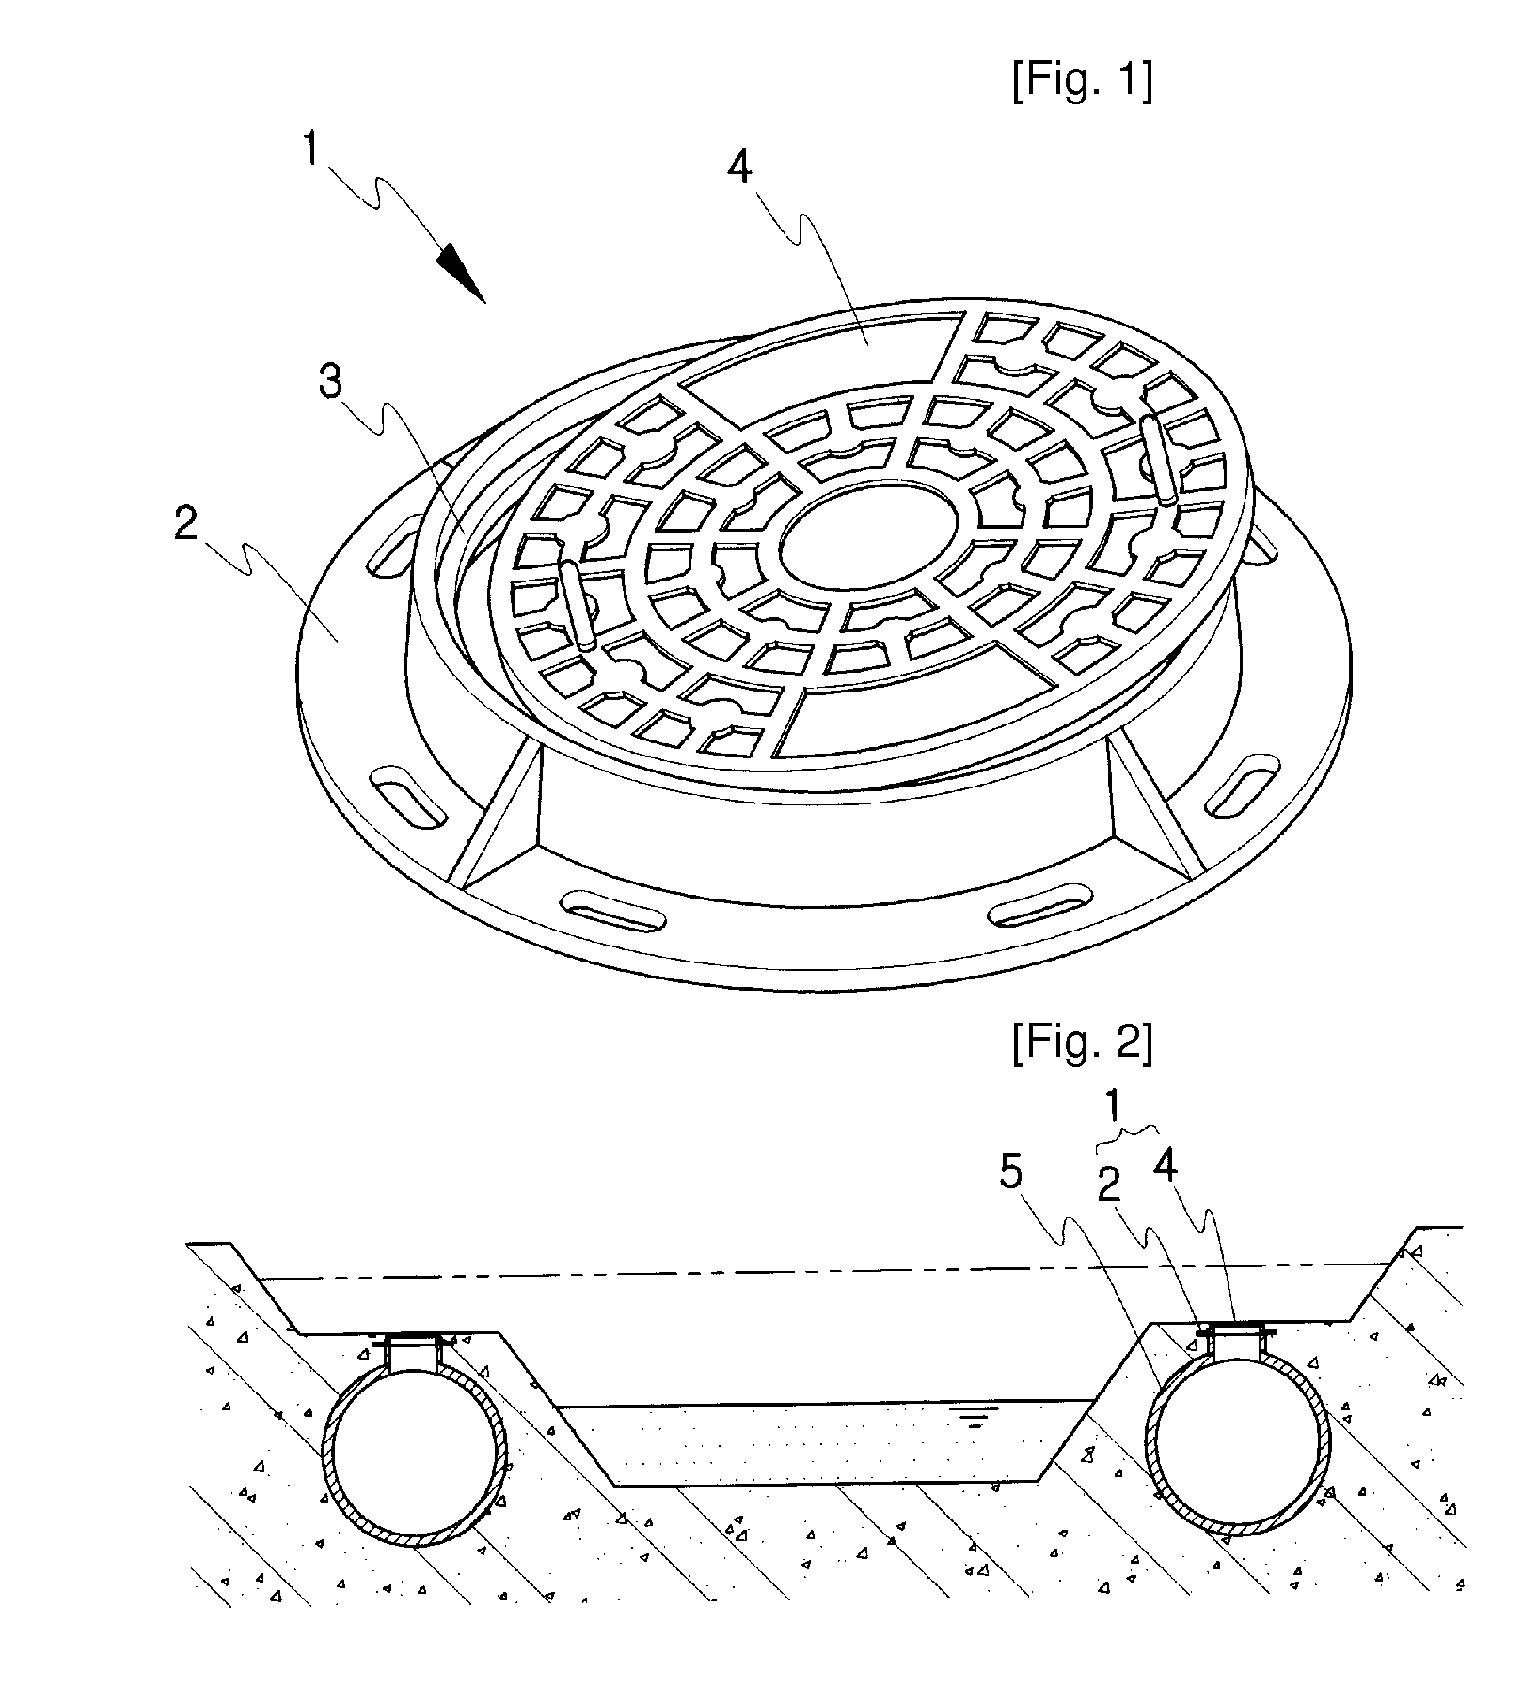 Manhole with locking device